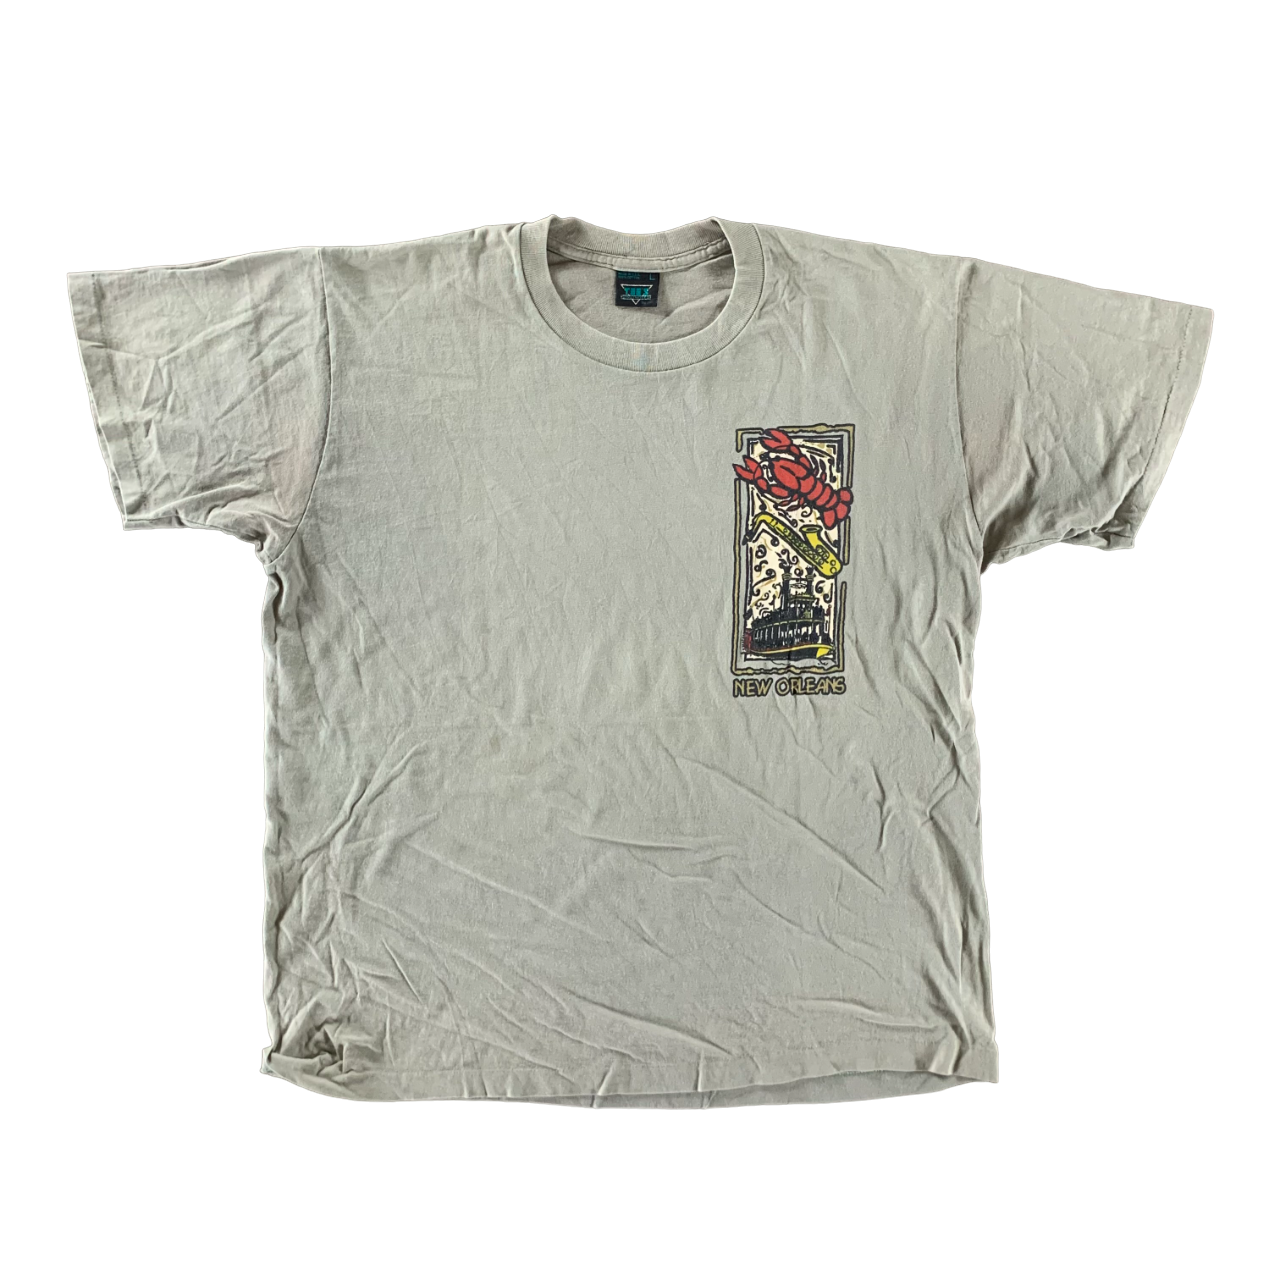 Vintage 1990s New Orleans T-shirt size Large